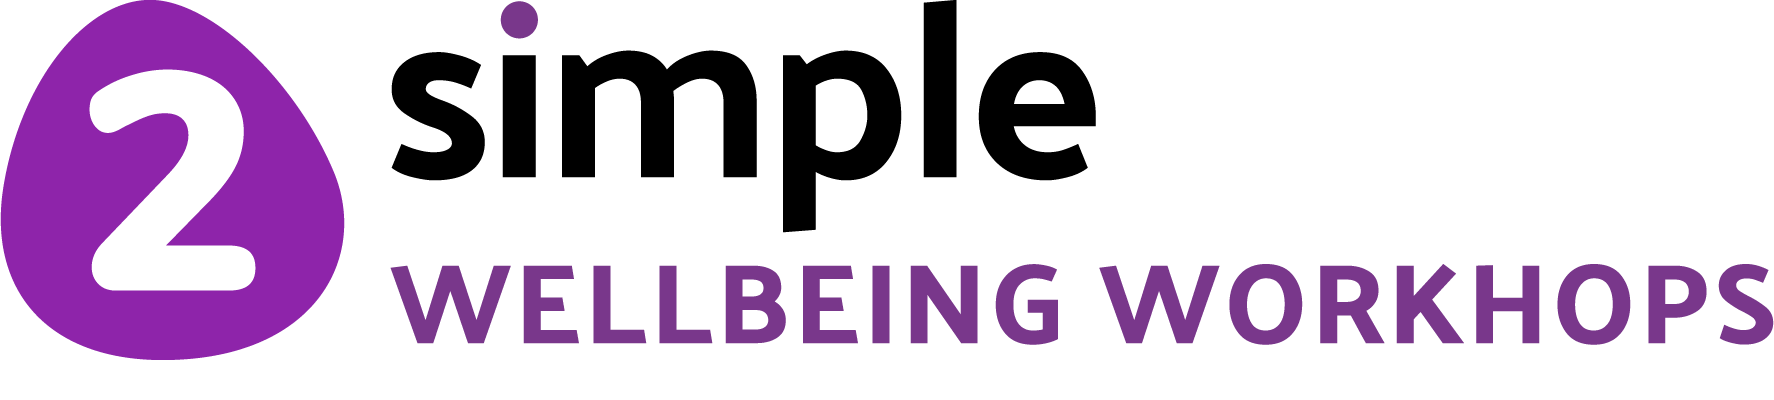 Wellbeing Workshops logo by 2Simple Ltd